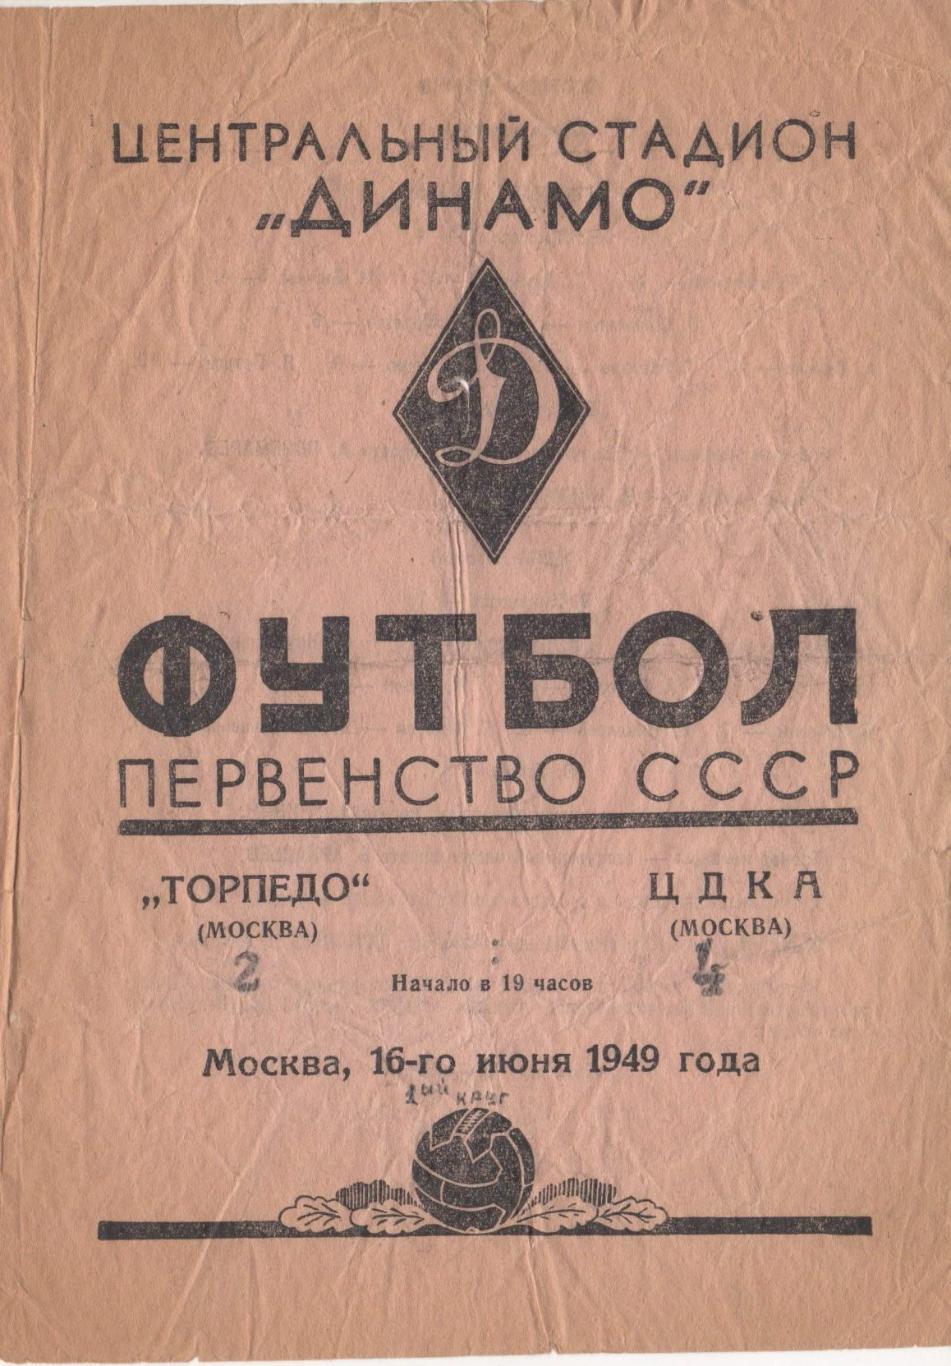 Программка матча Торпедо Москва - ЦДКА (ЦСКА). 16 июня 1949 г. Стадион Динамо.